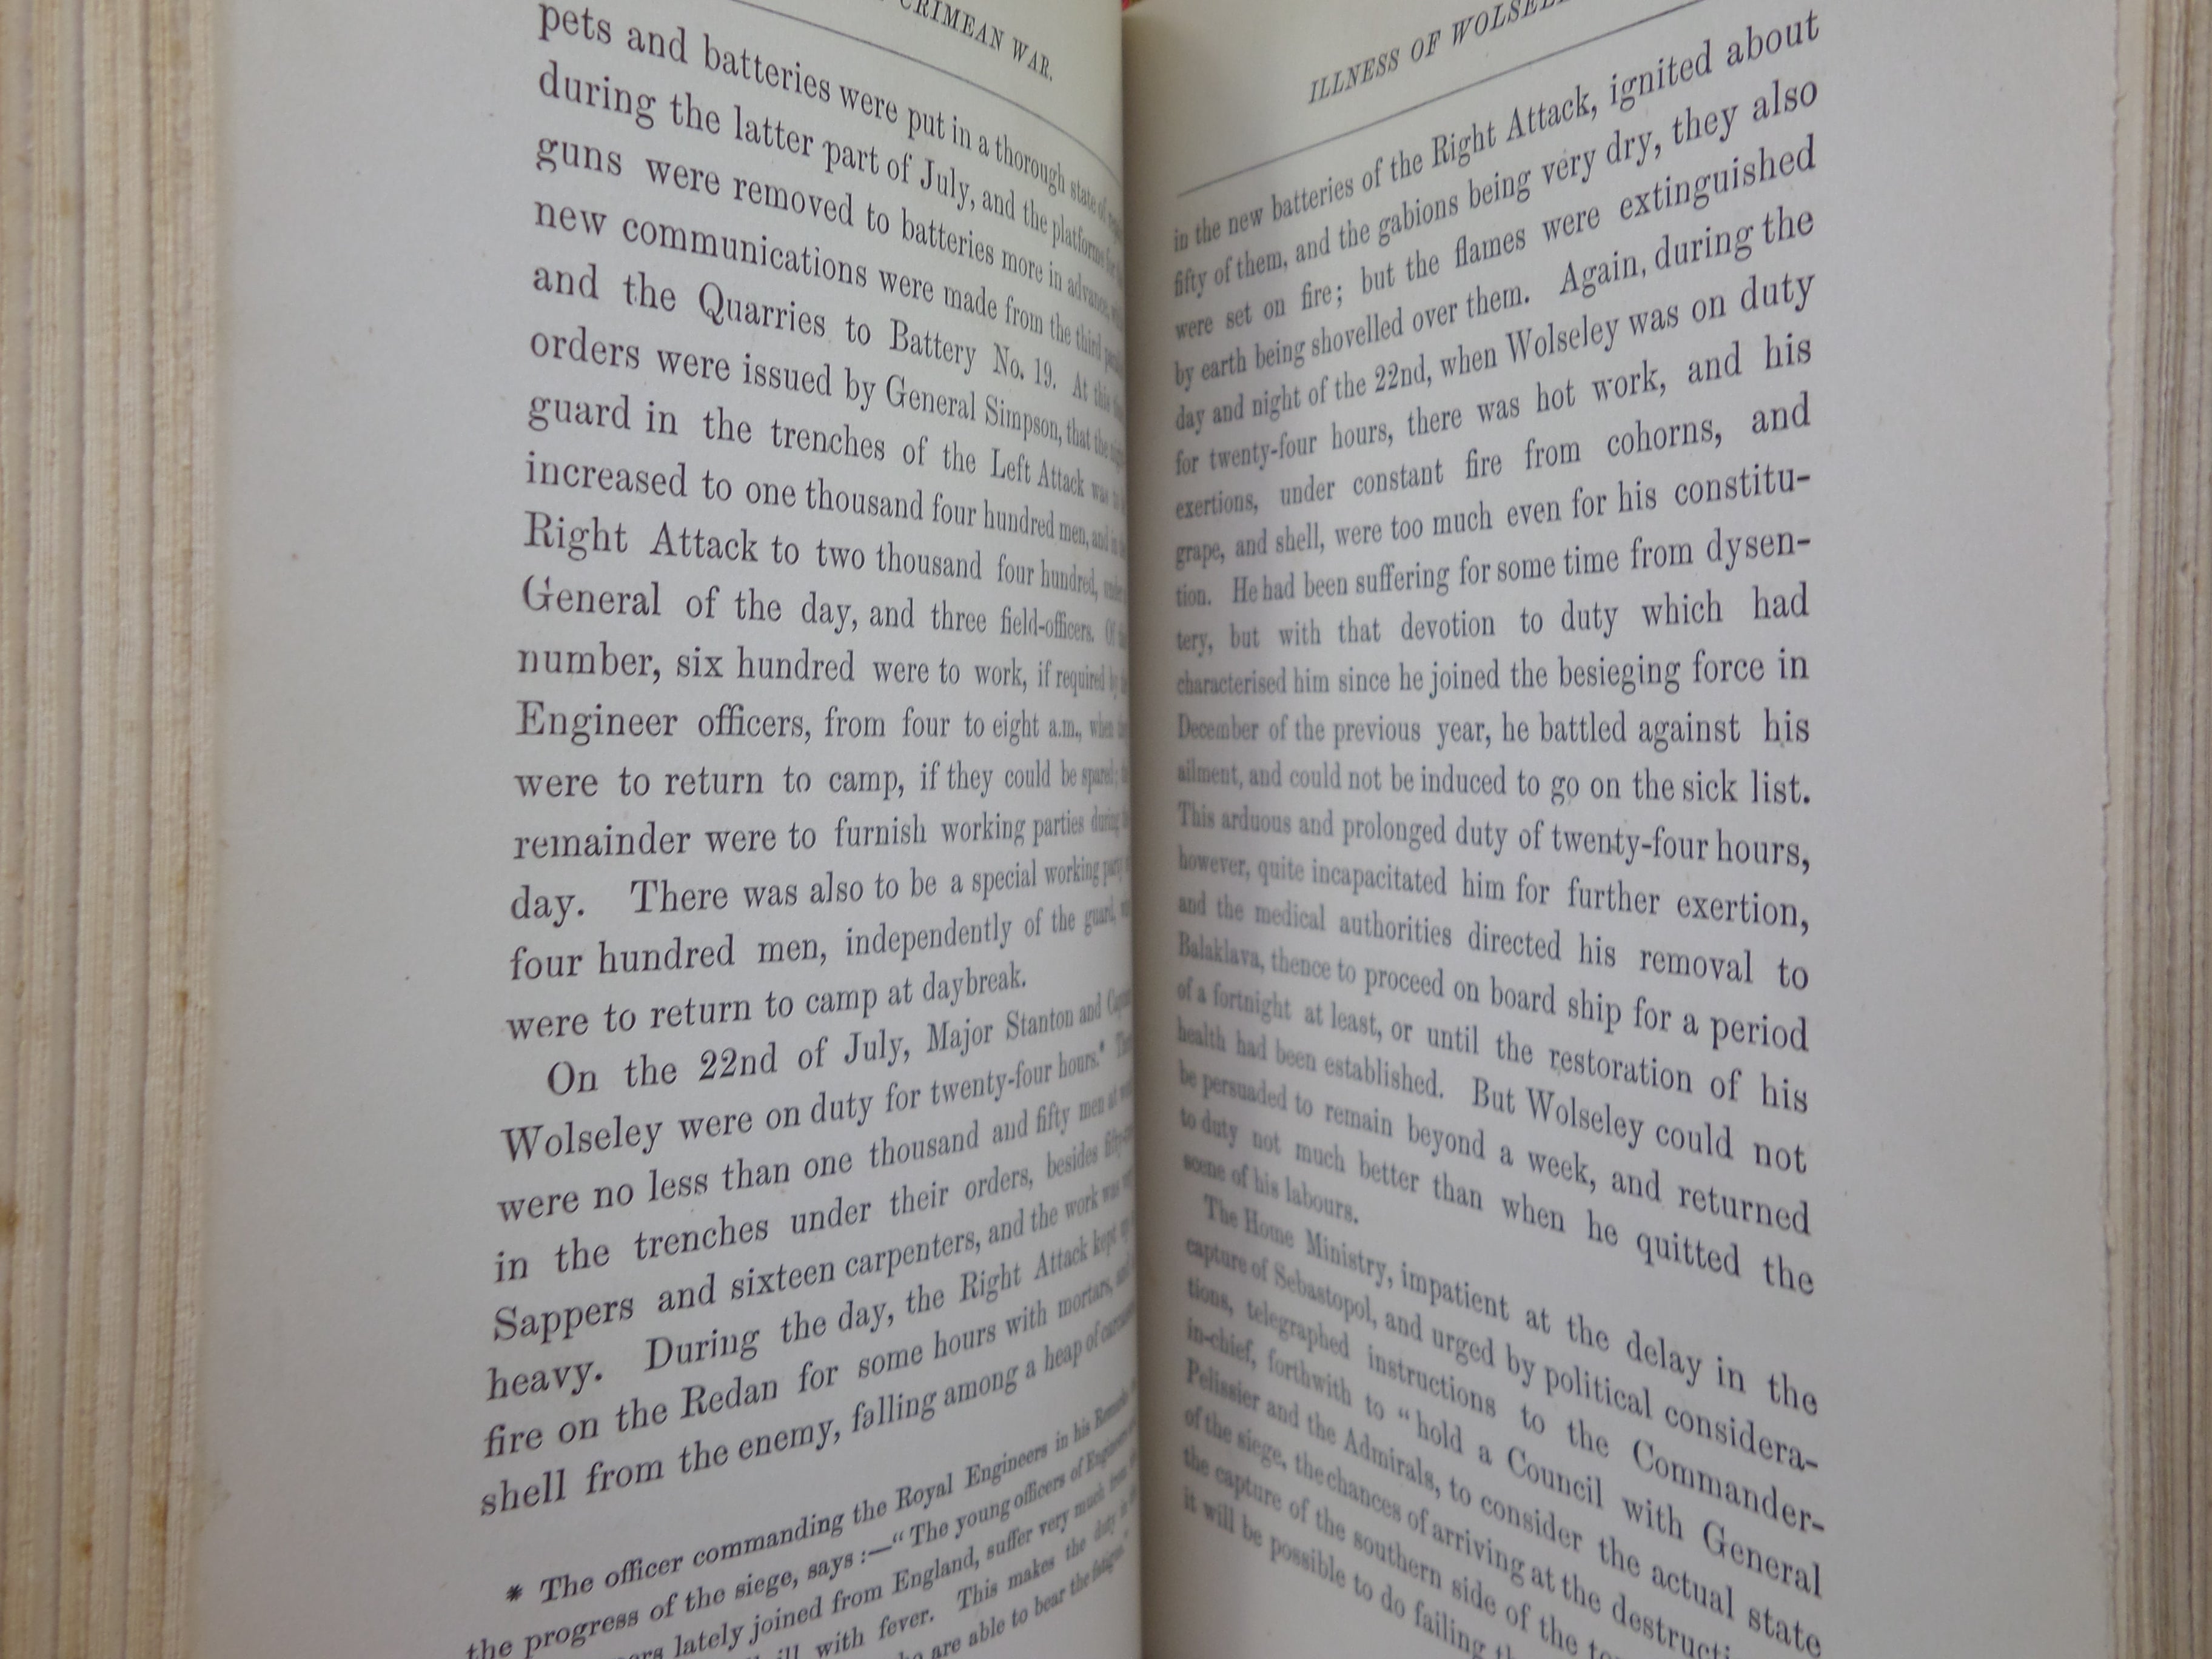 A MEMOIR OF LIEUTENANT-GENERAL SIR GARNET J. WOLSELEY BY CHARLES RATHBONE LOW 1878 FIRST EDITION FINELY BOUND BY BAYNTUN-RIVIERE